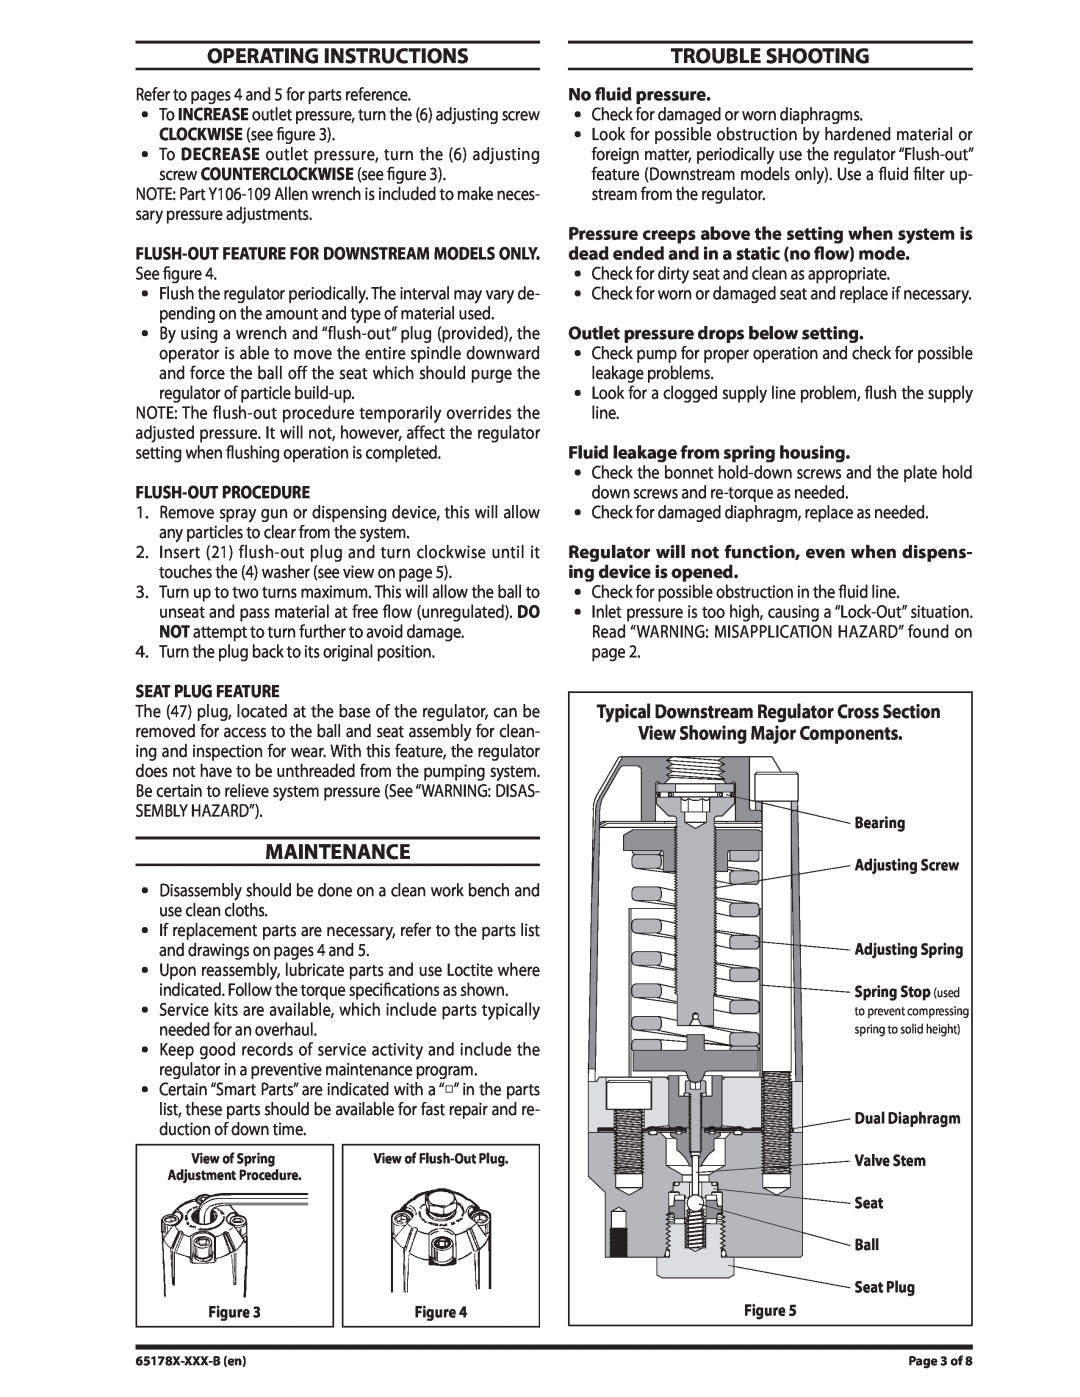 Ingersoll-Rand 65178X-XXX-B Operating Instructions, Maintenance, Trouble Shooting, Flush-Outprocedure, Seat Plug Feature 